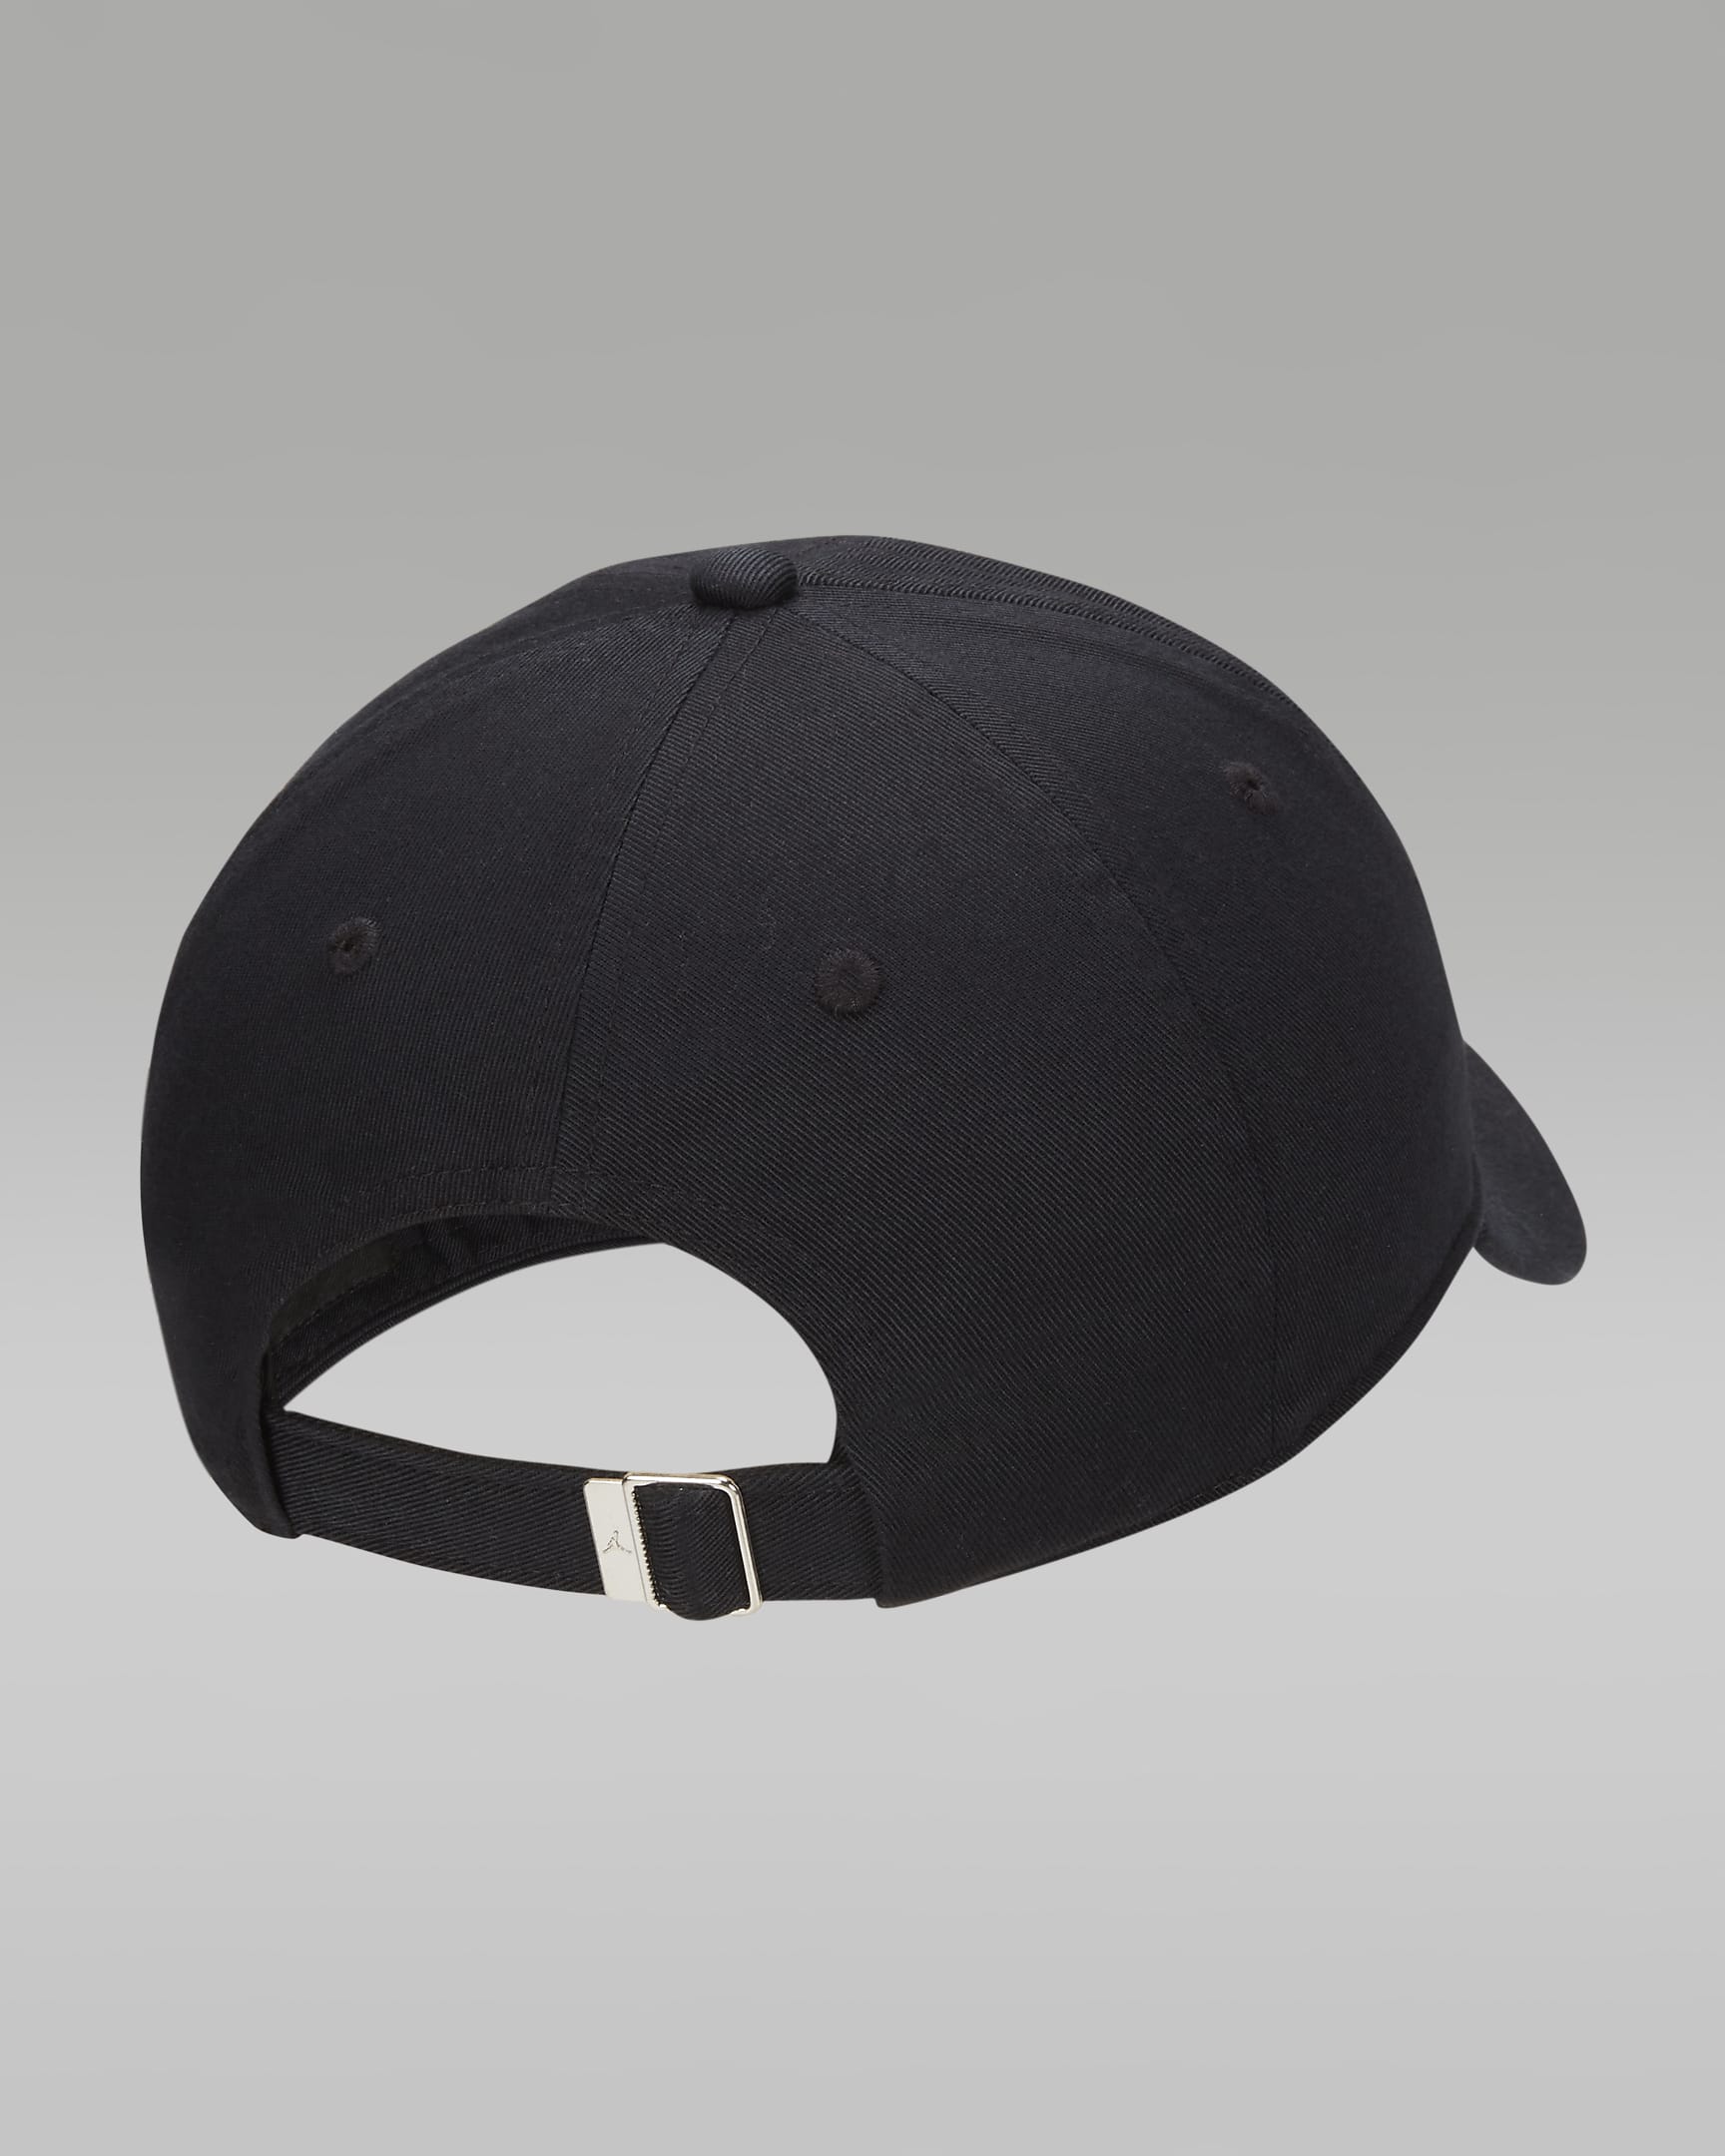 Jordan Club Cap Adjustable Hat - Black/Sail/Black